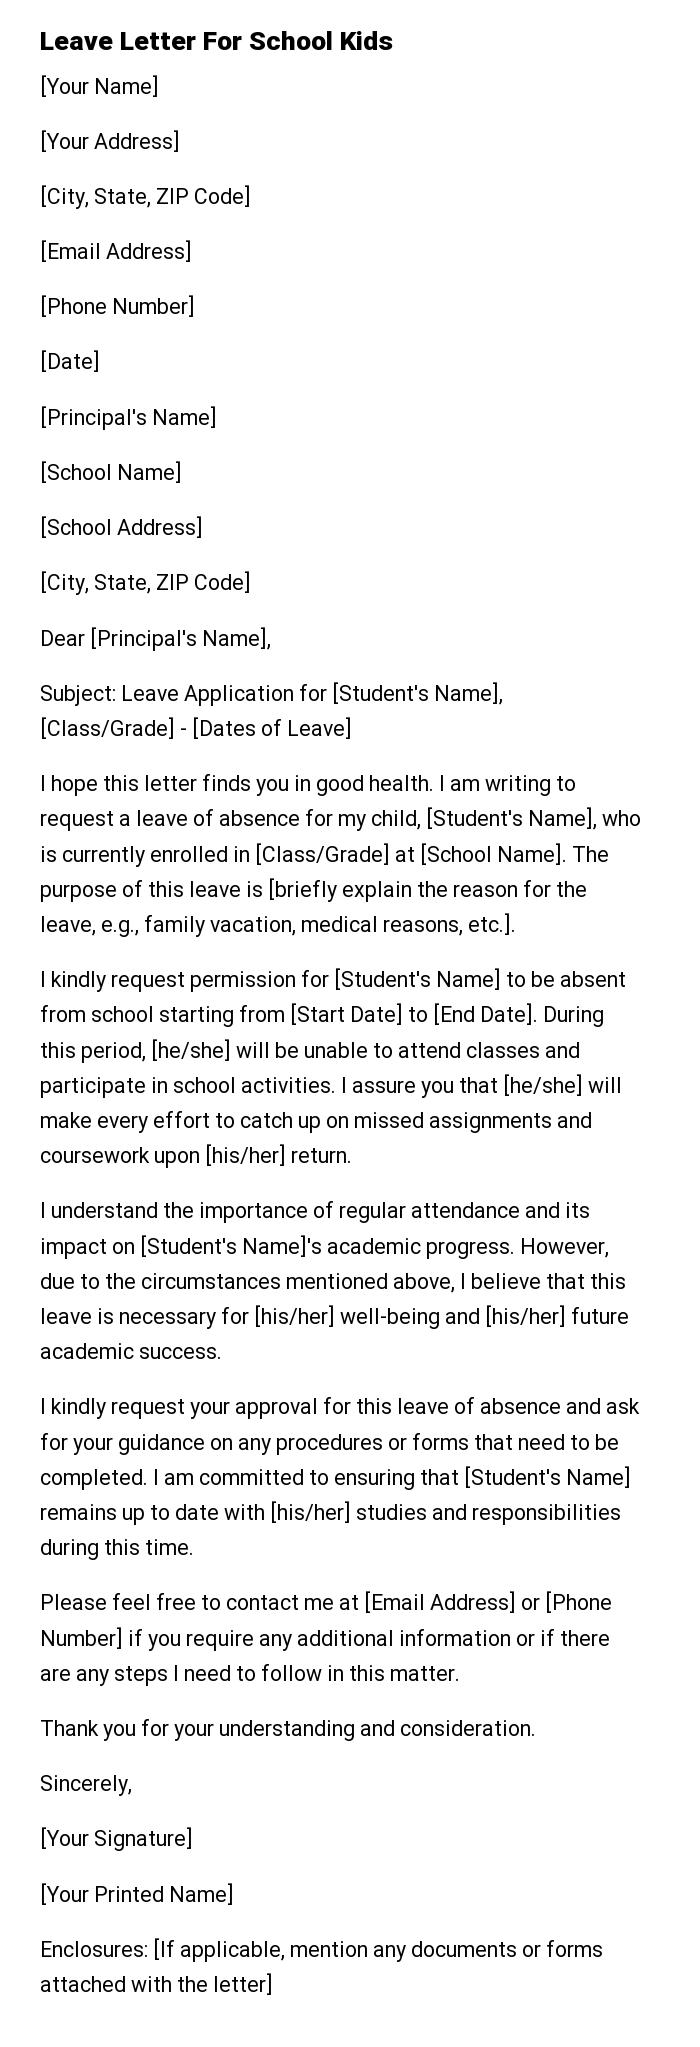 Leave Letter For School Kids